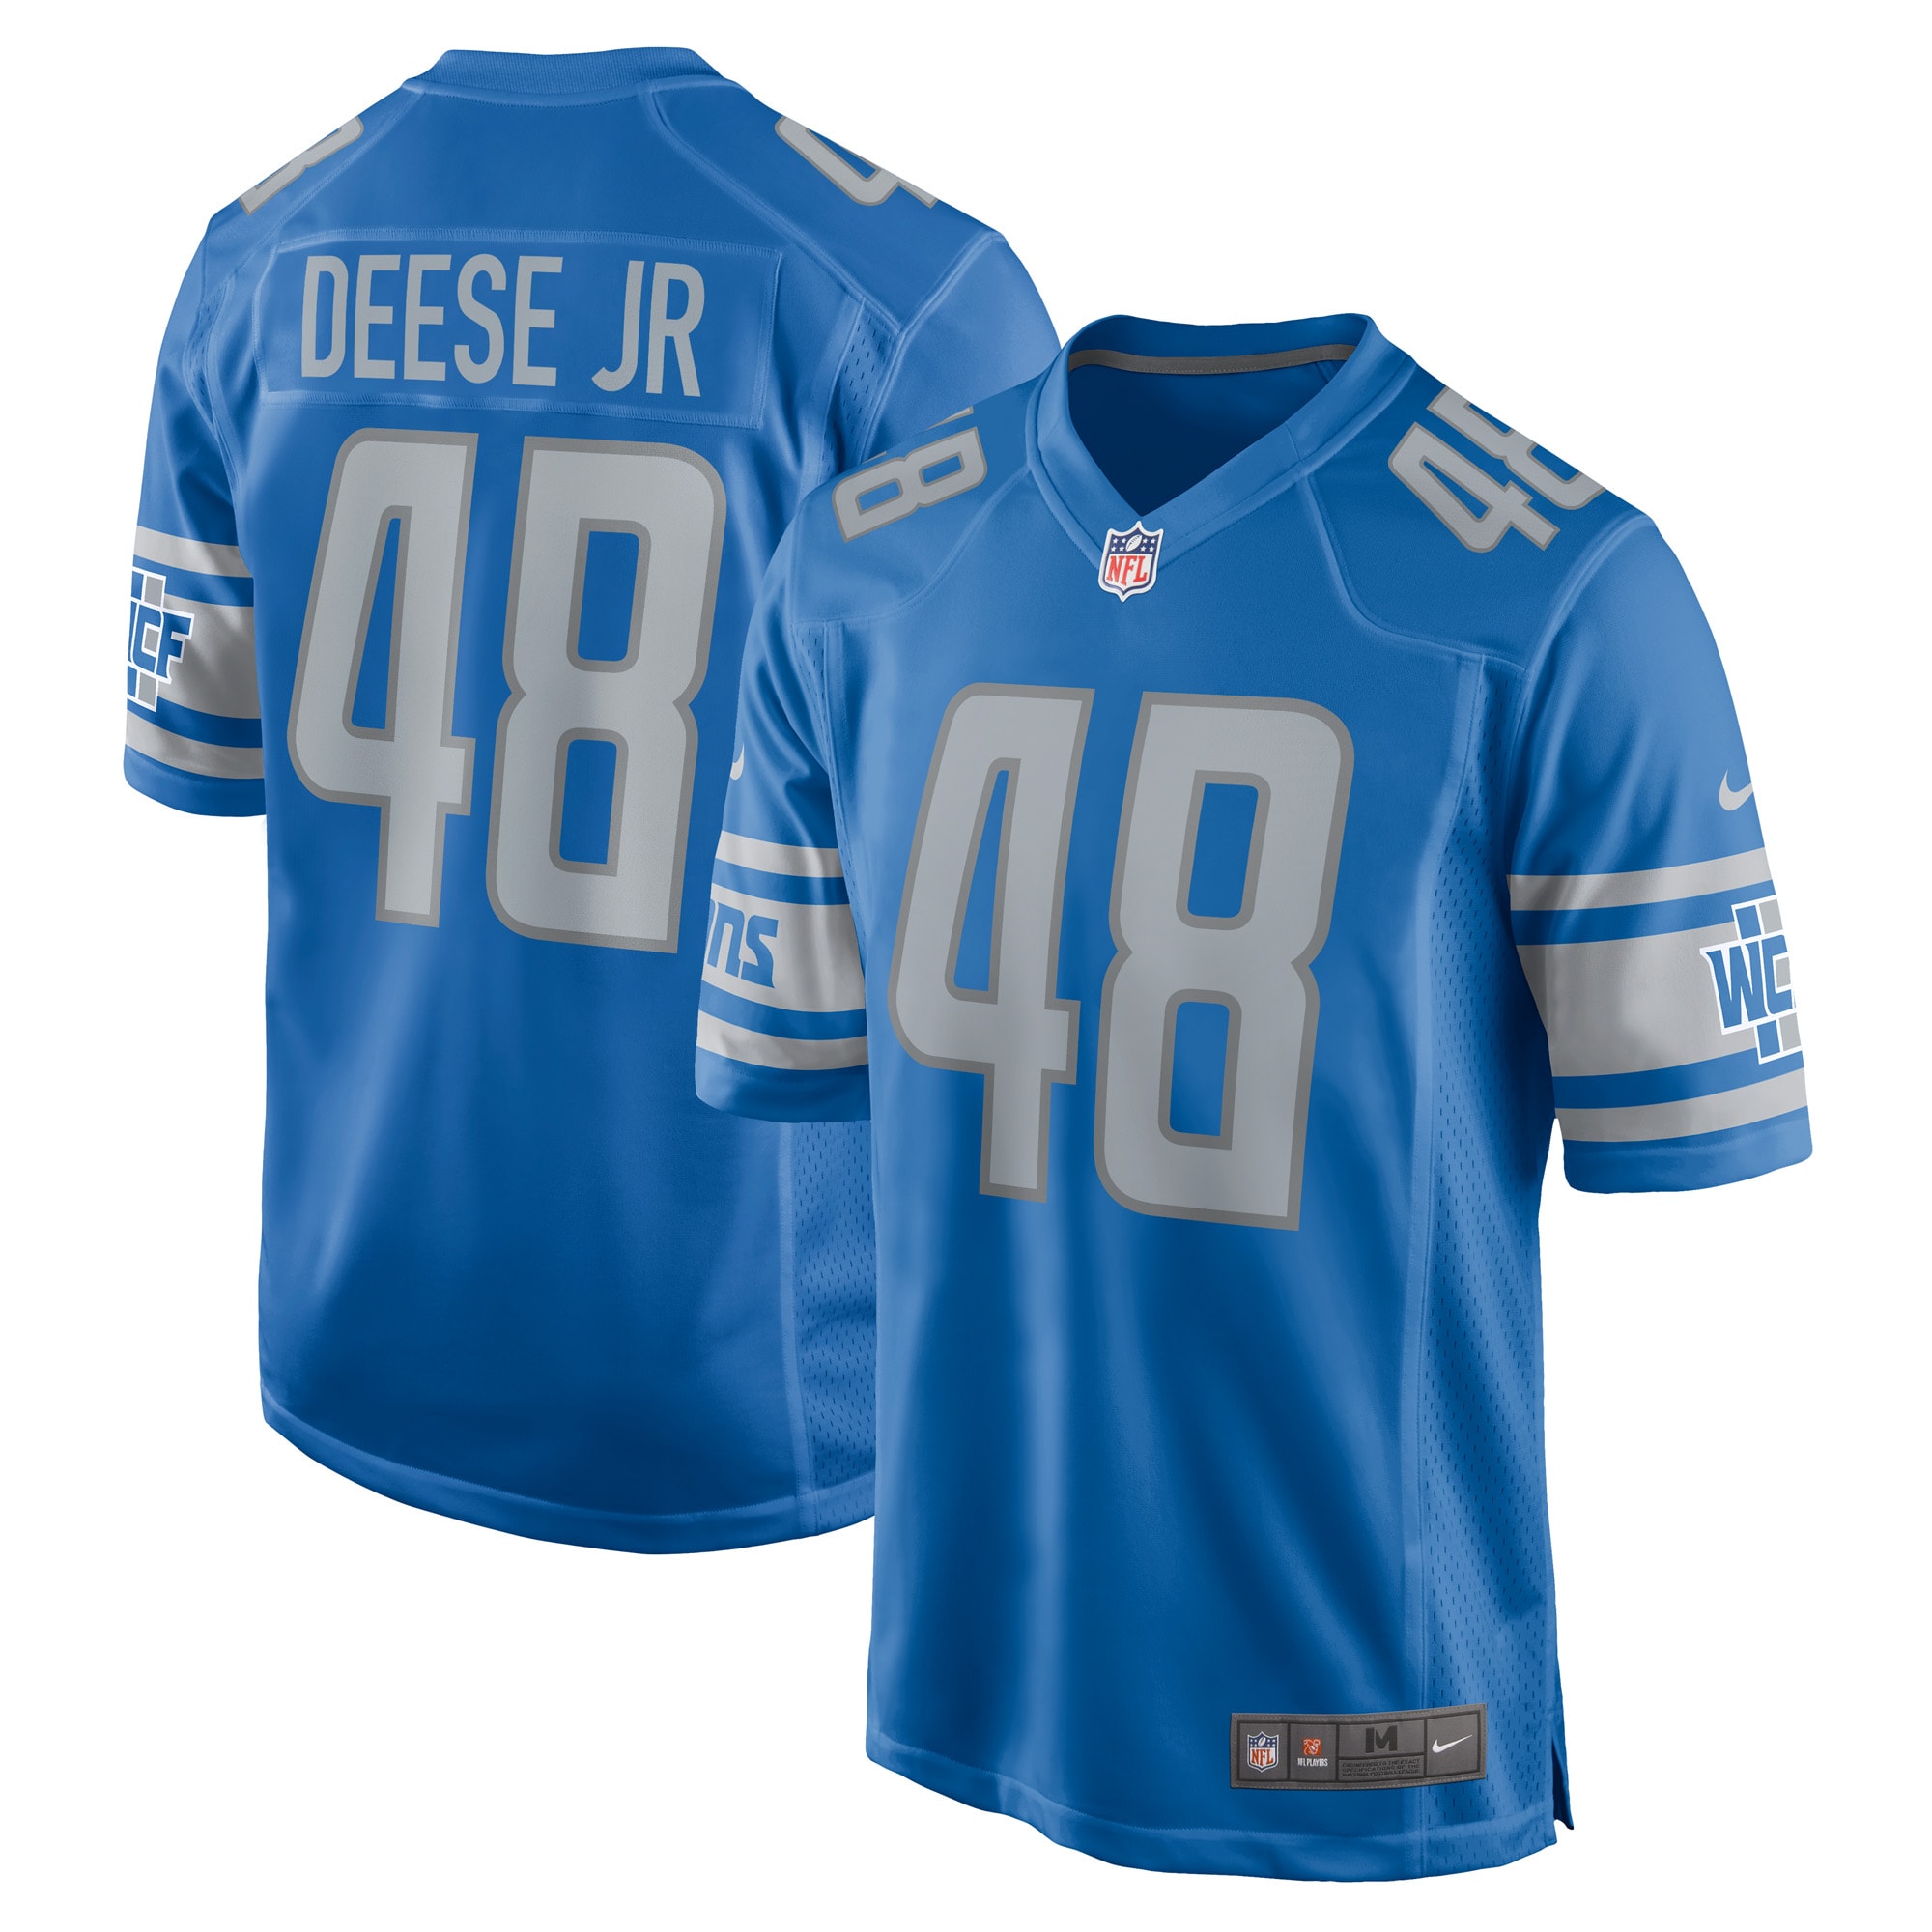 Men's Detroit Lions Jerseys Blue Derrick Deese Jr. Player Game Style